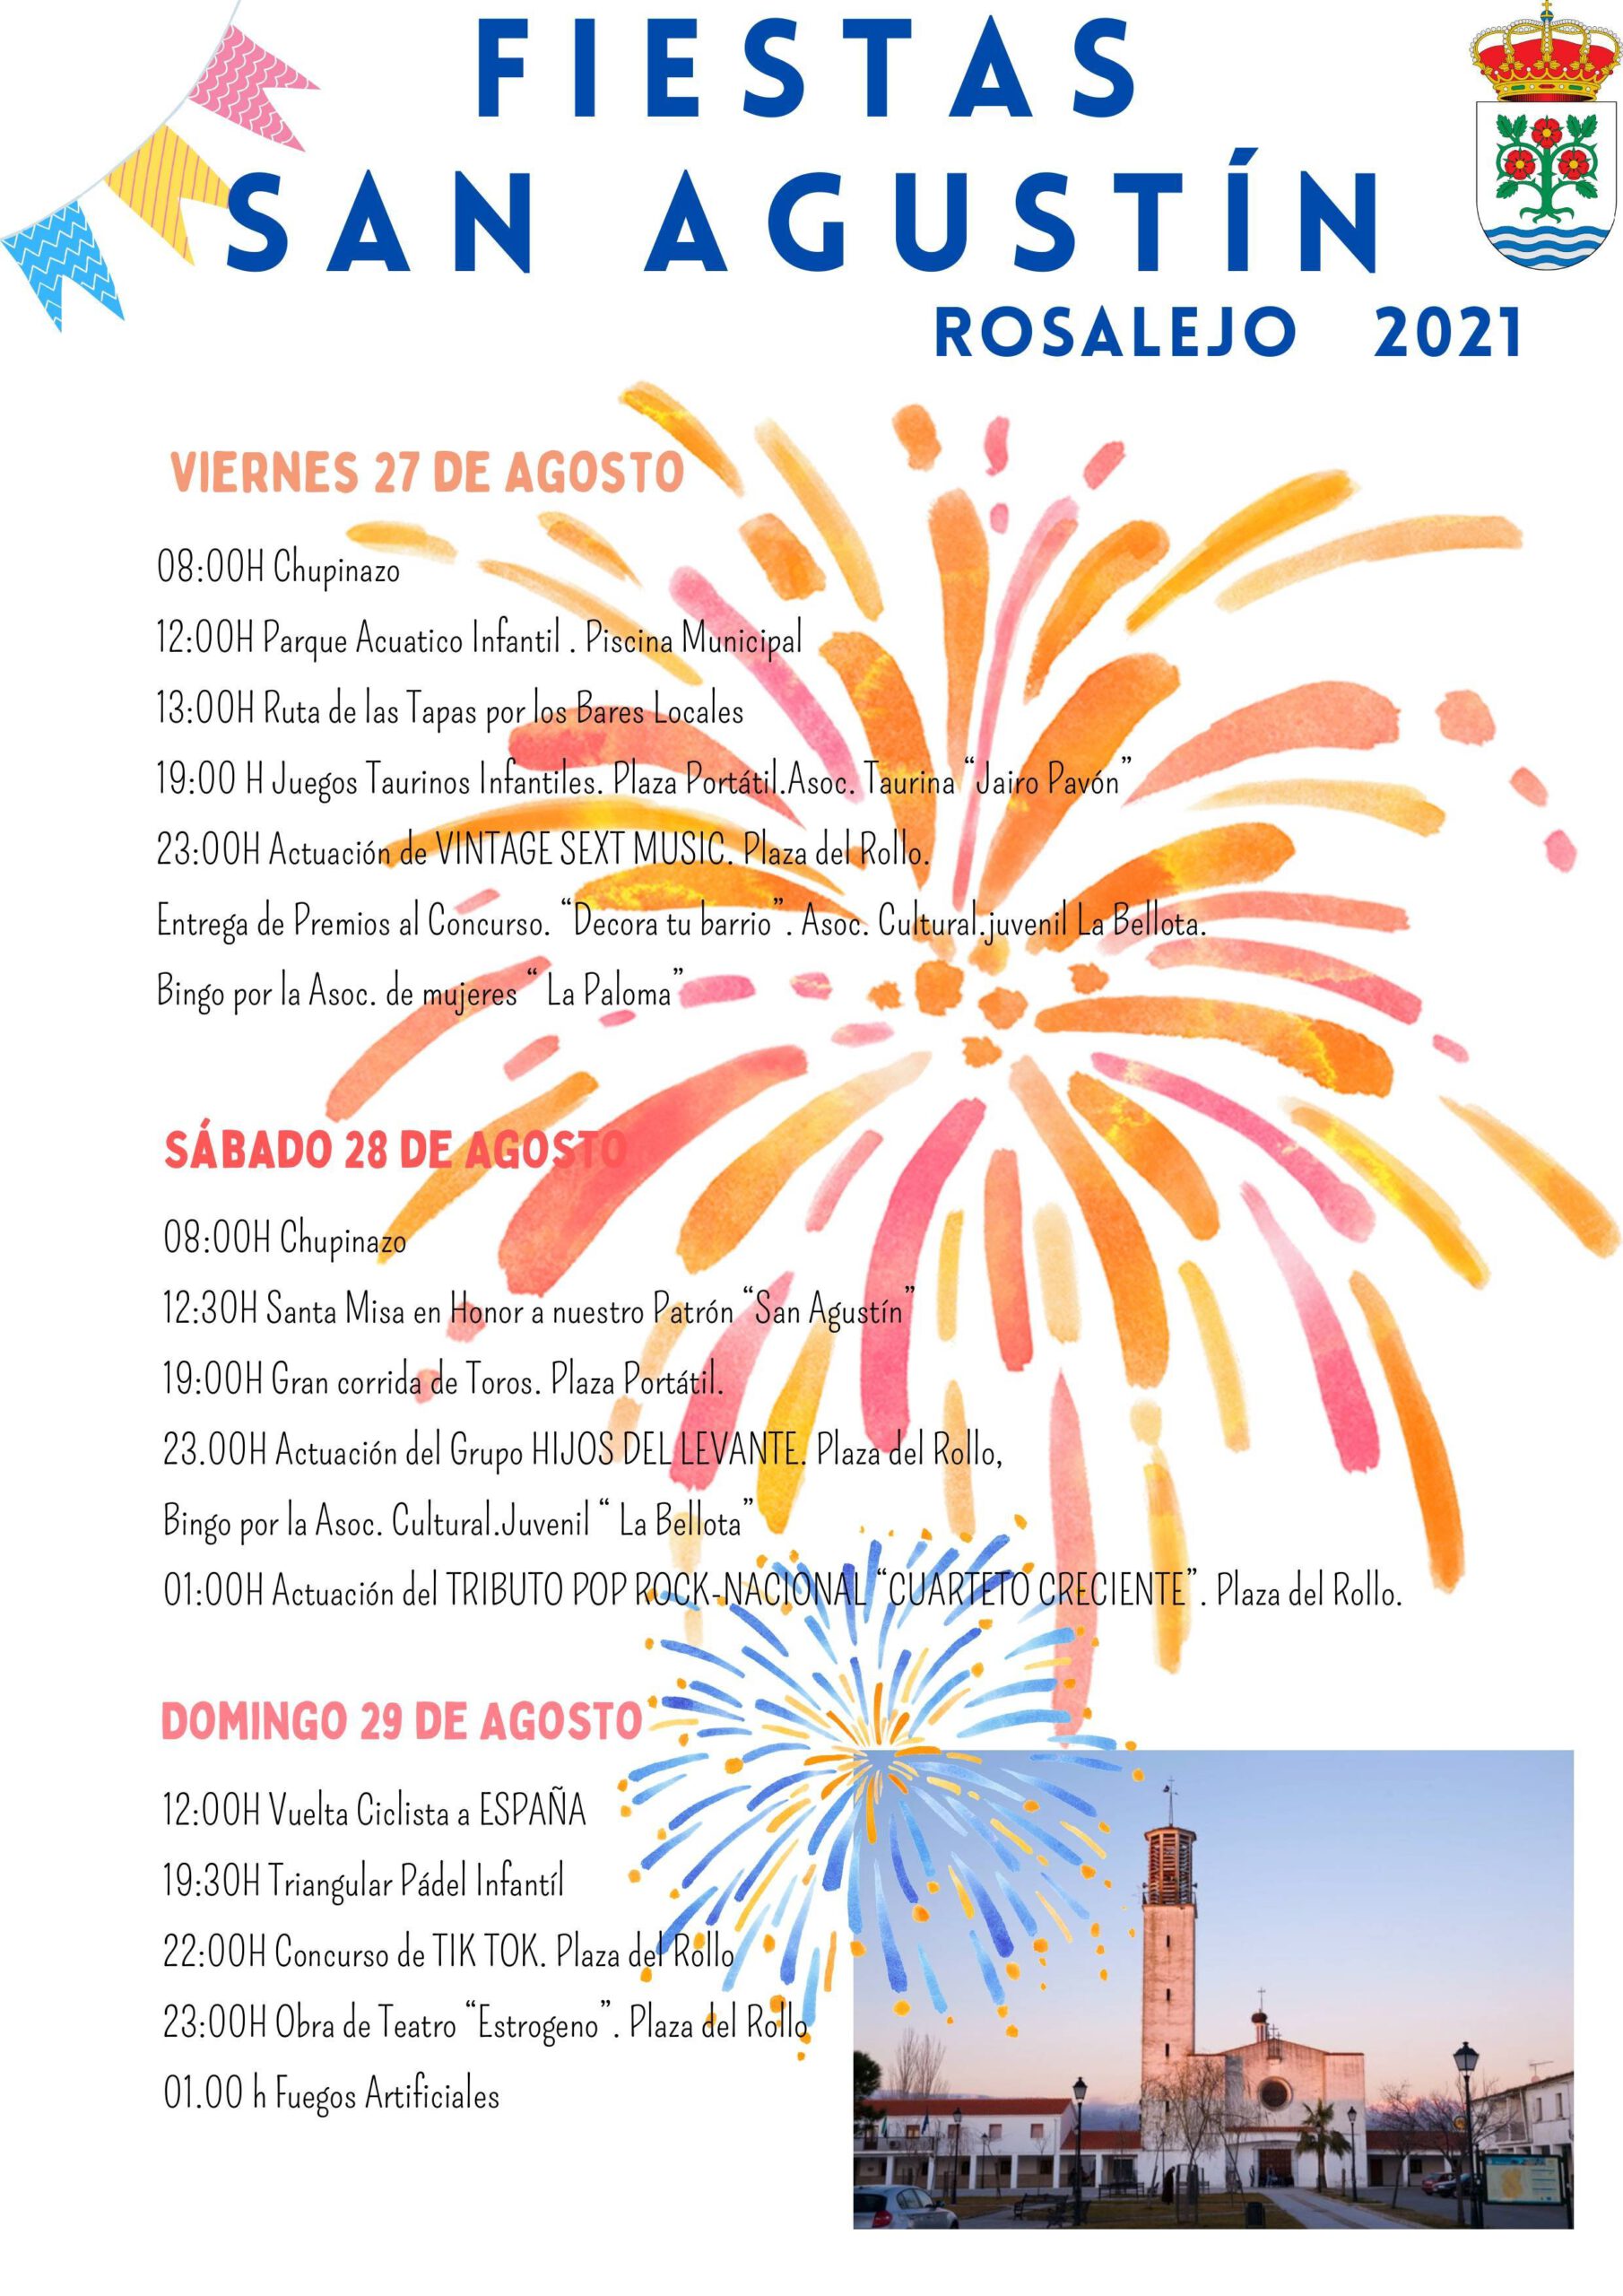 Fiestas de San Agustín (2021) - Rosalejo (Cáceres)